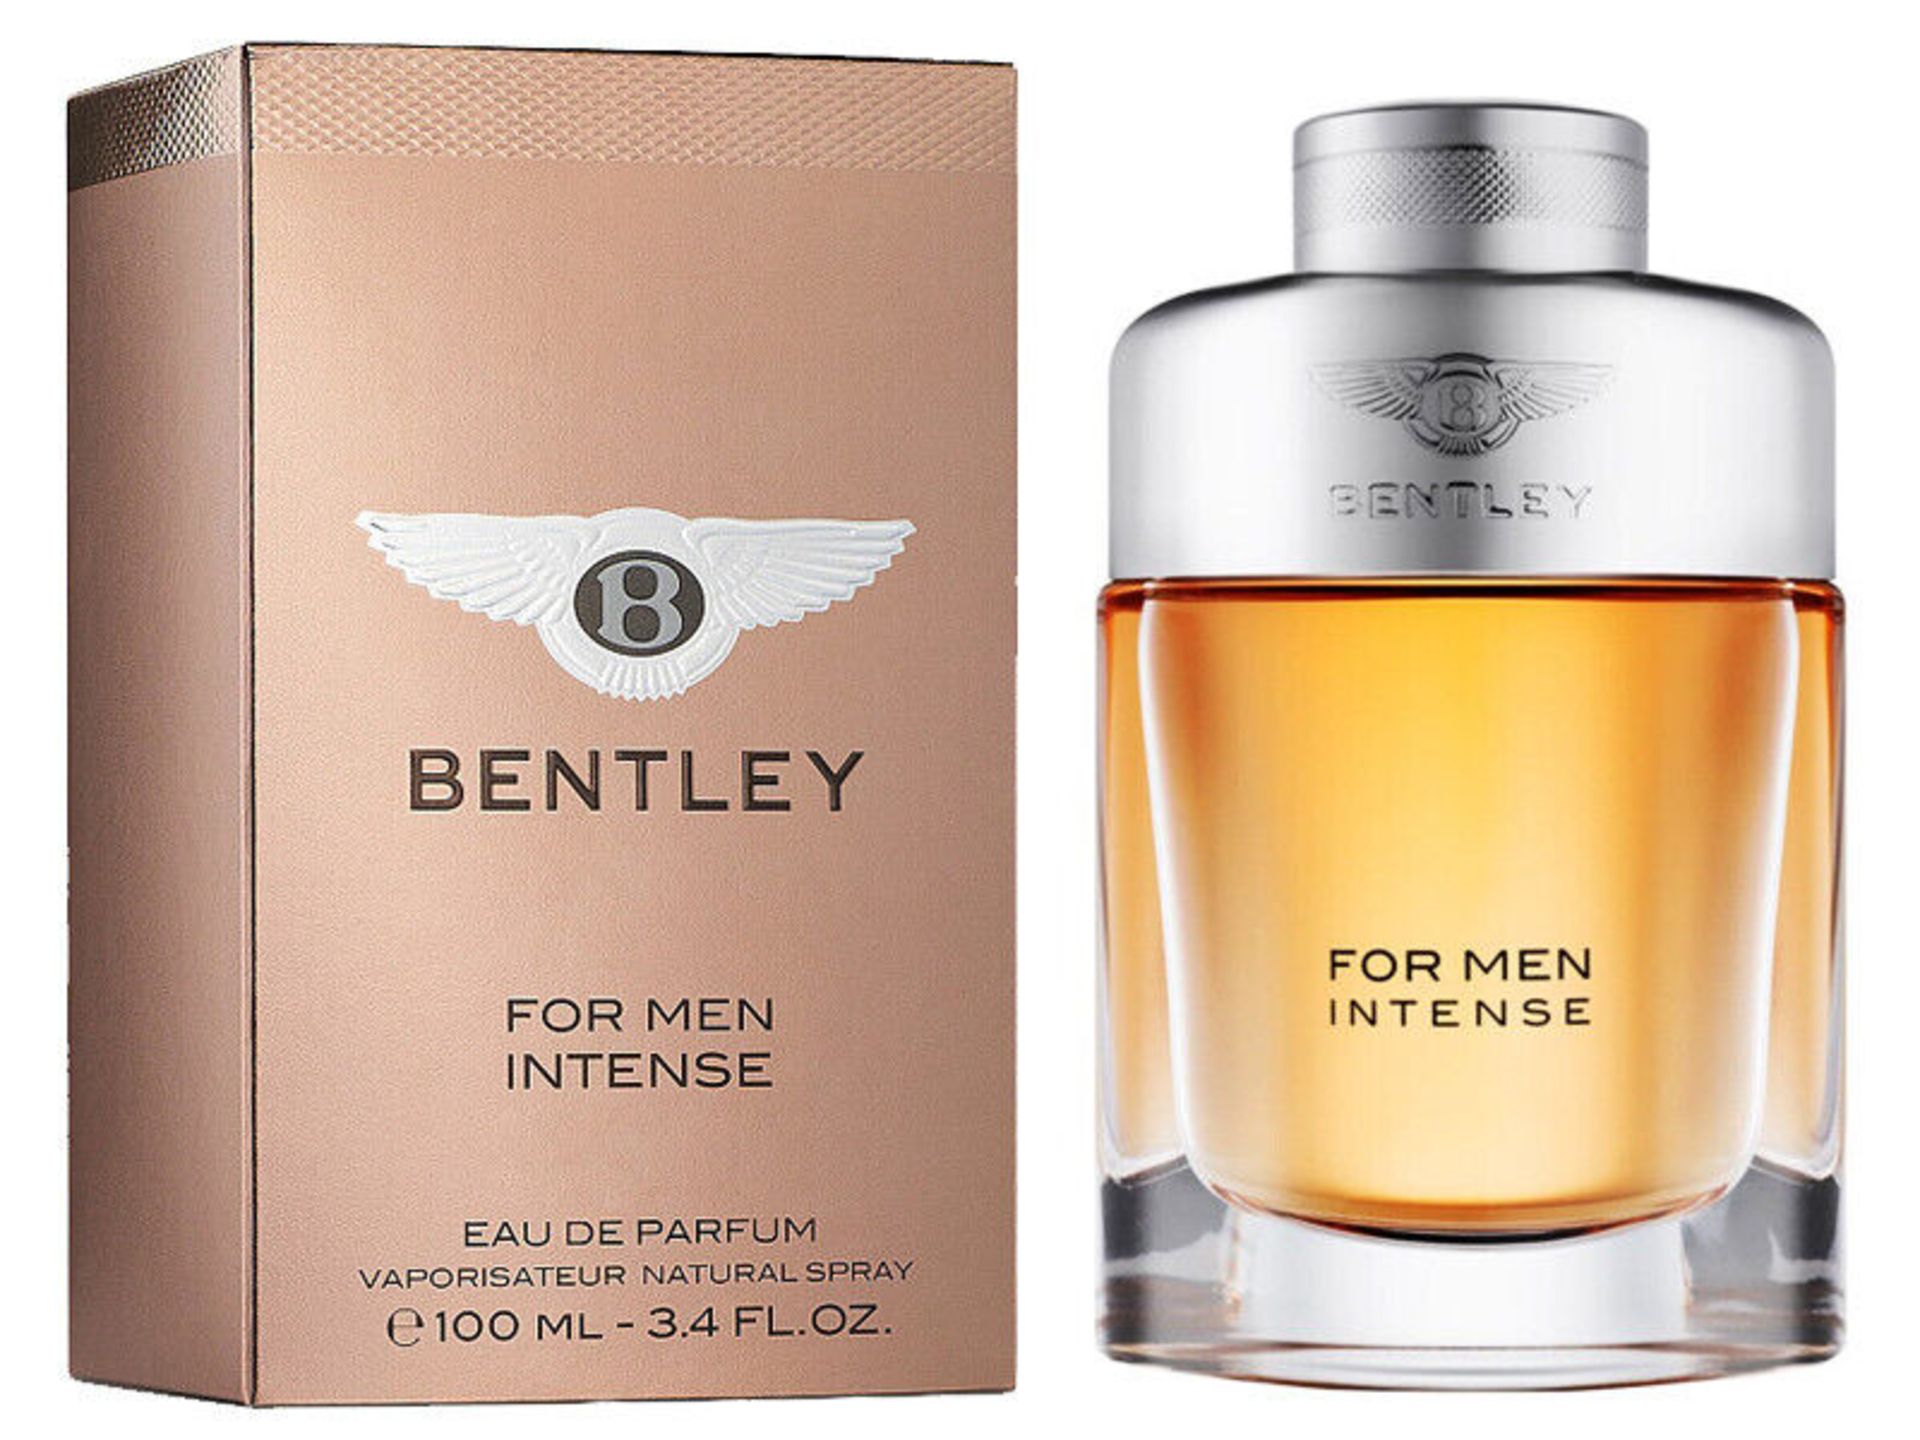 Bentley Intense for Men Eau de Parfum 100ml Spray - Image 2 of 2